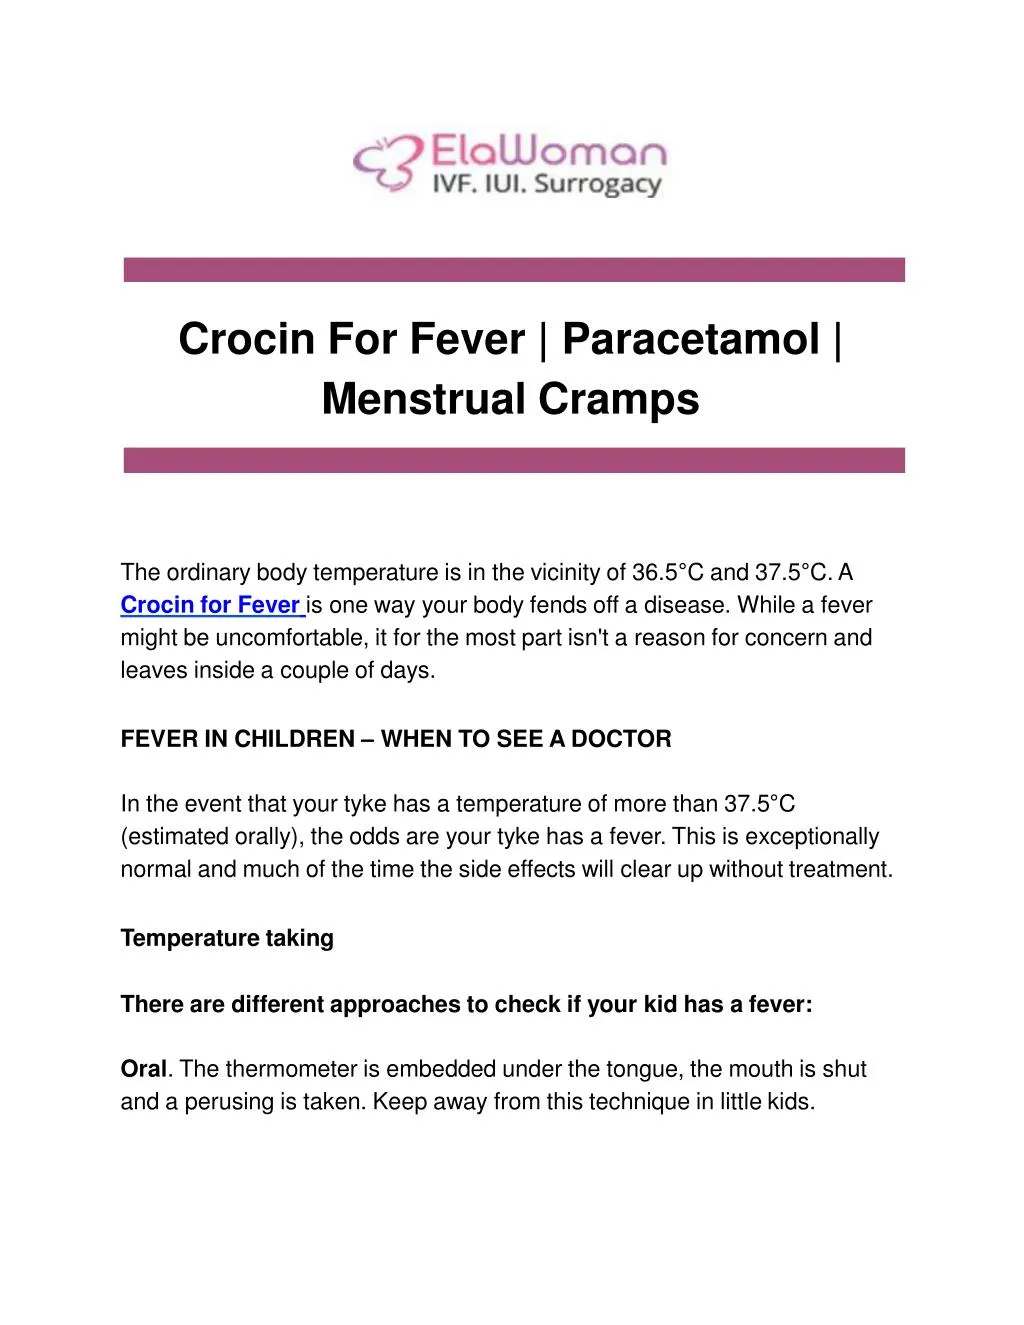 crocin for fever paracetamol menstrual cramps